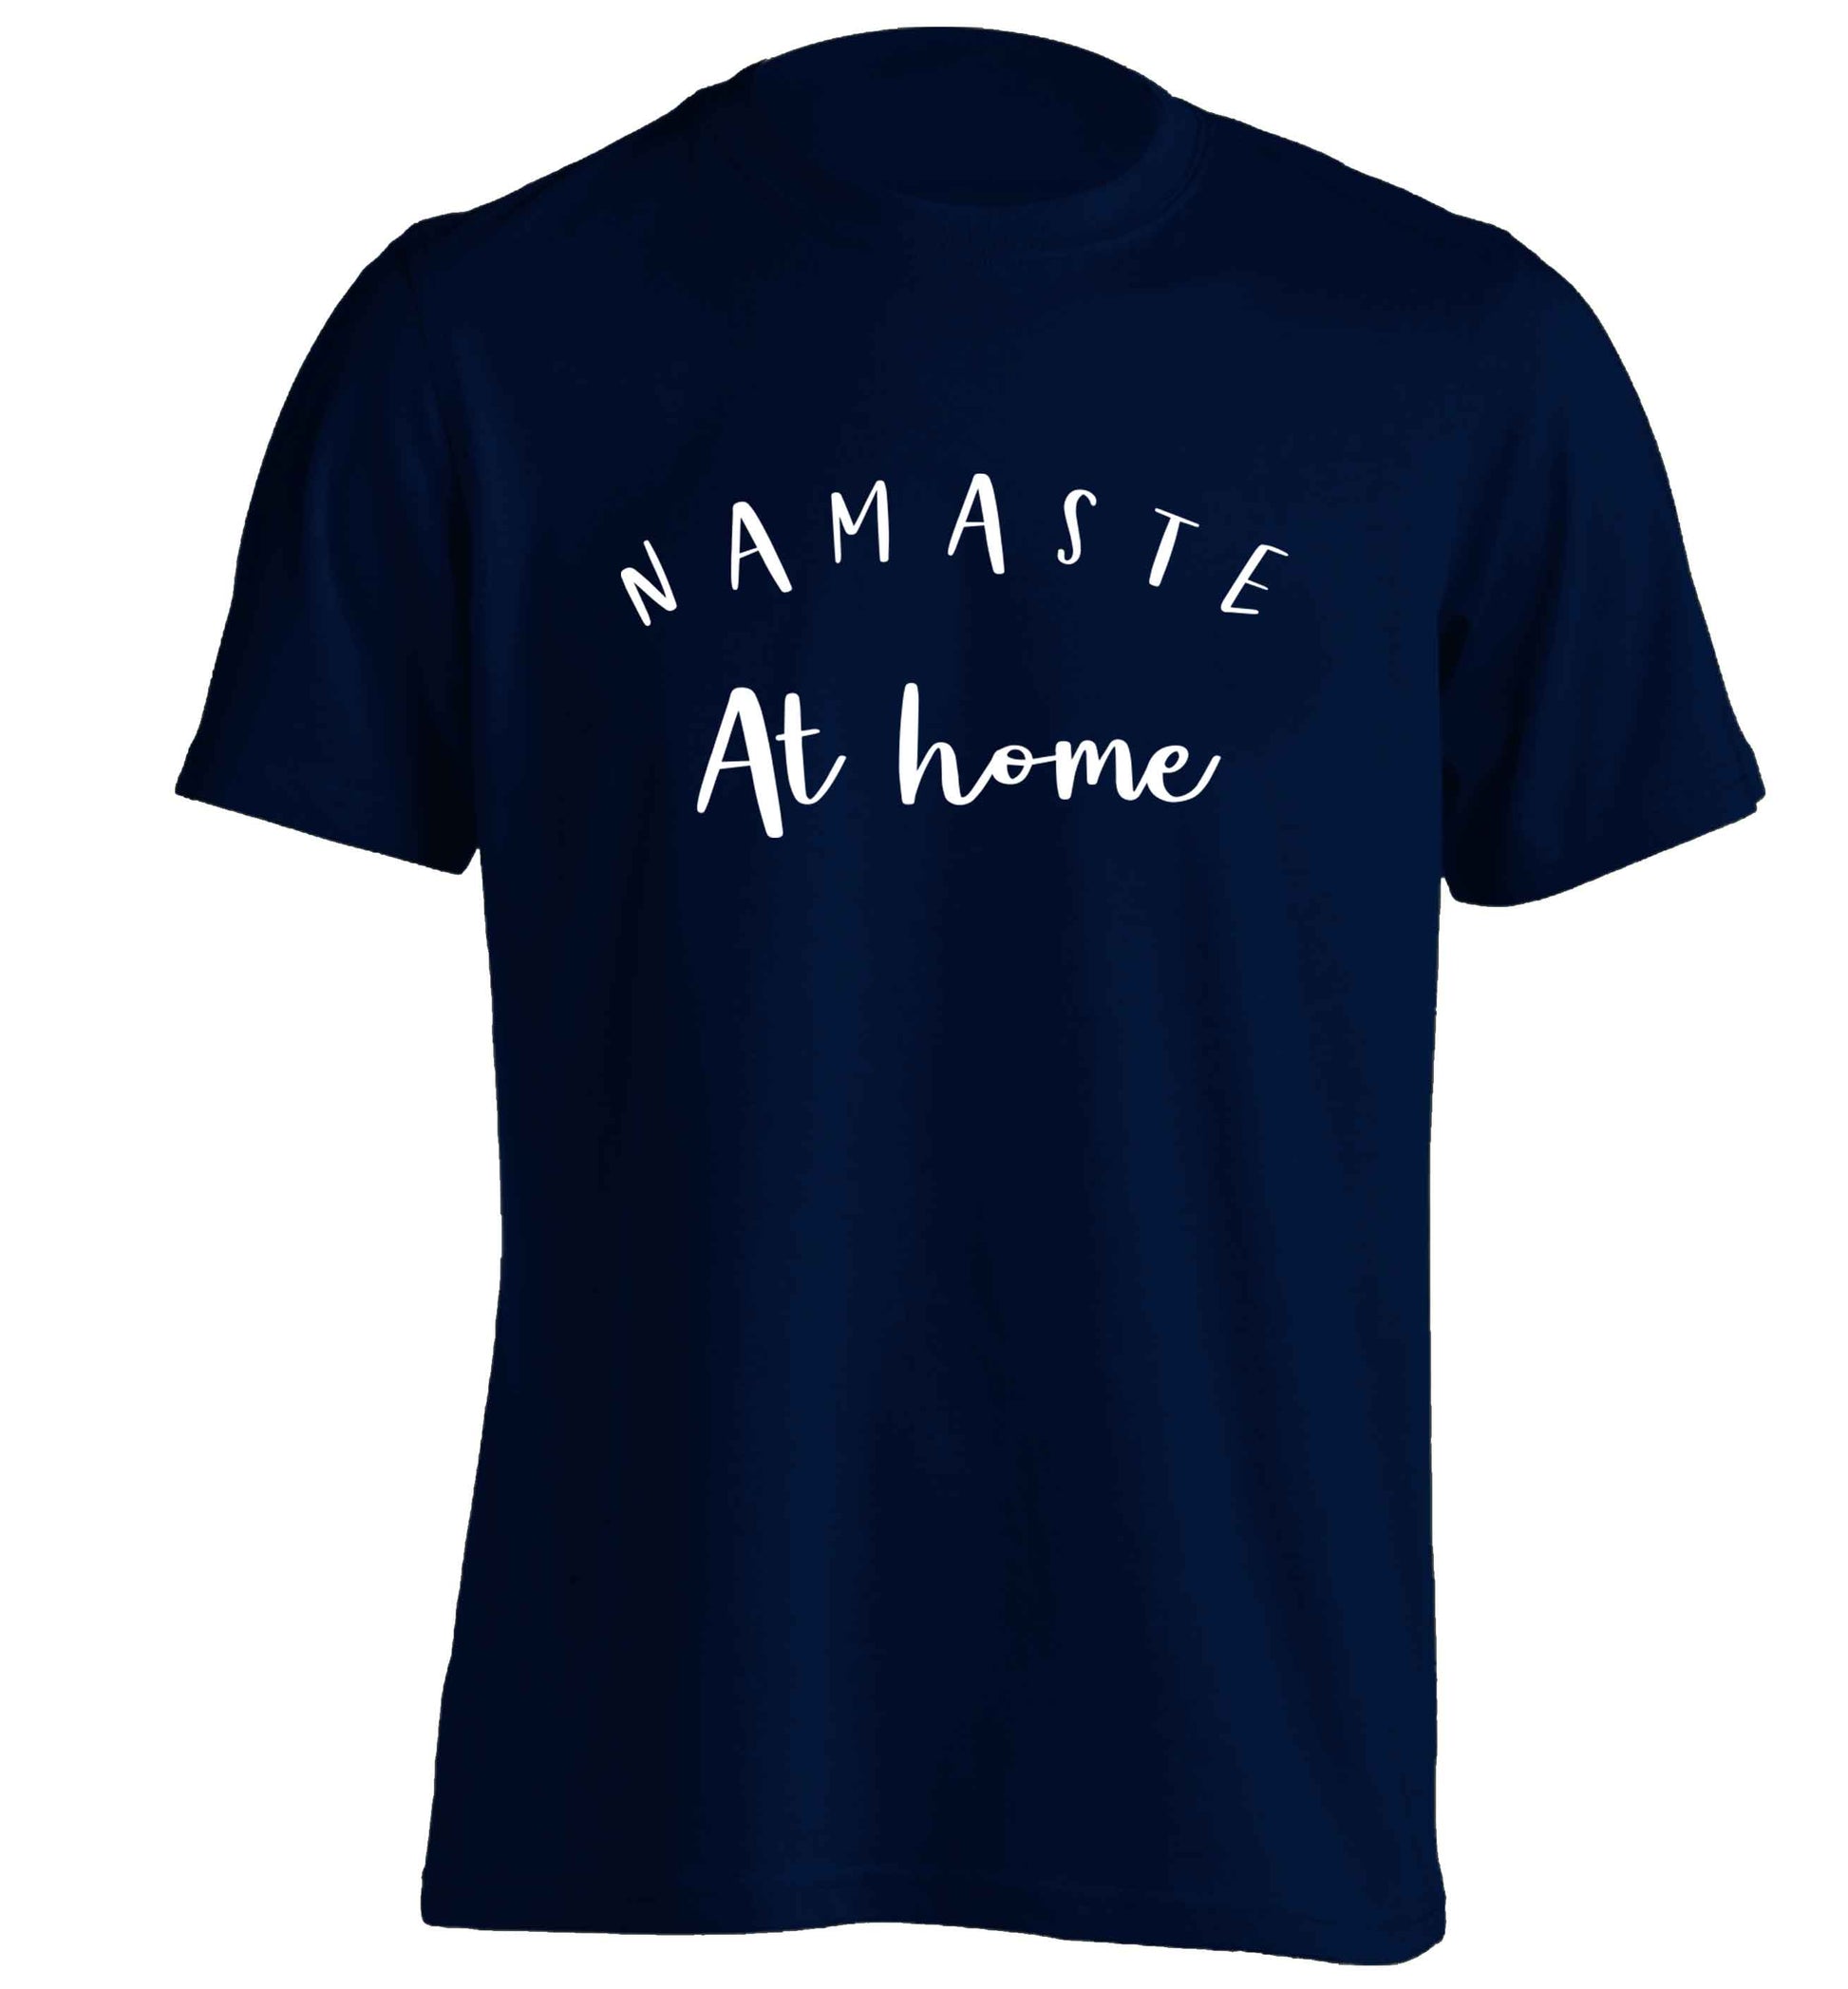 Namaste at home adults unisex navy Tshirt 2XL